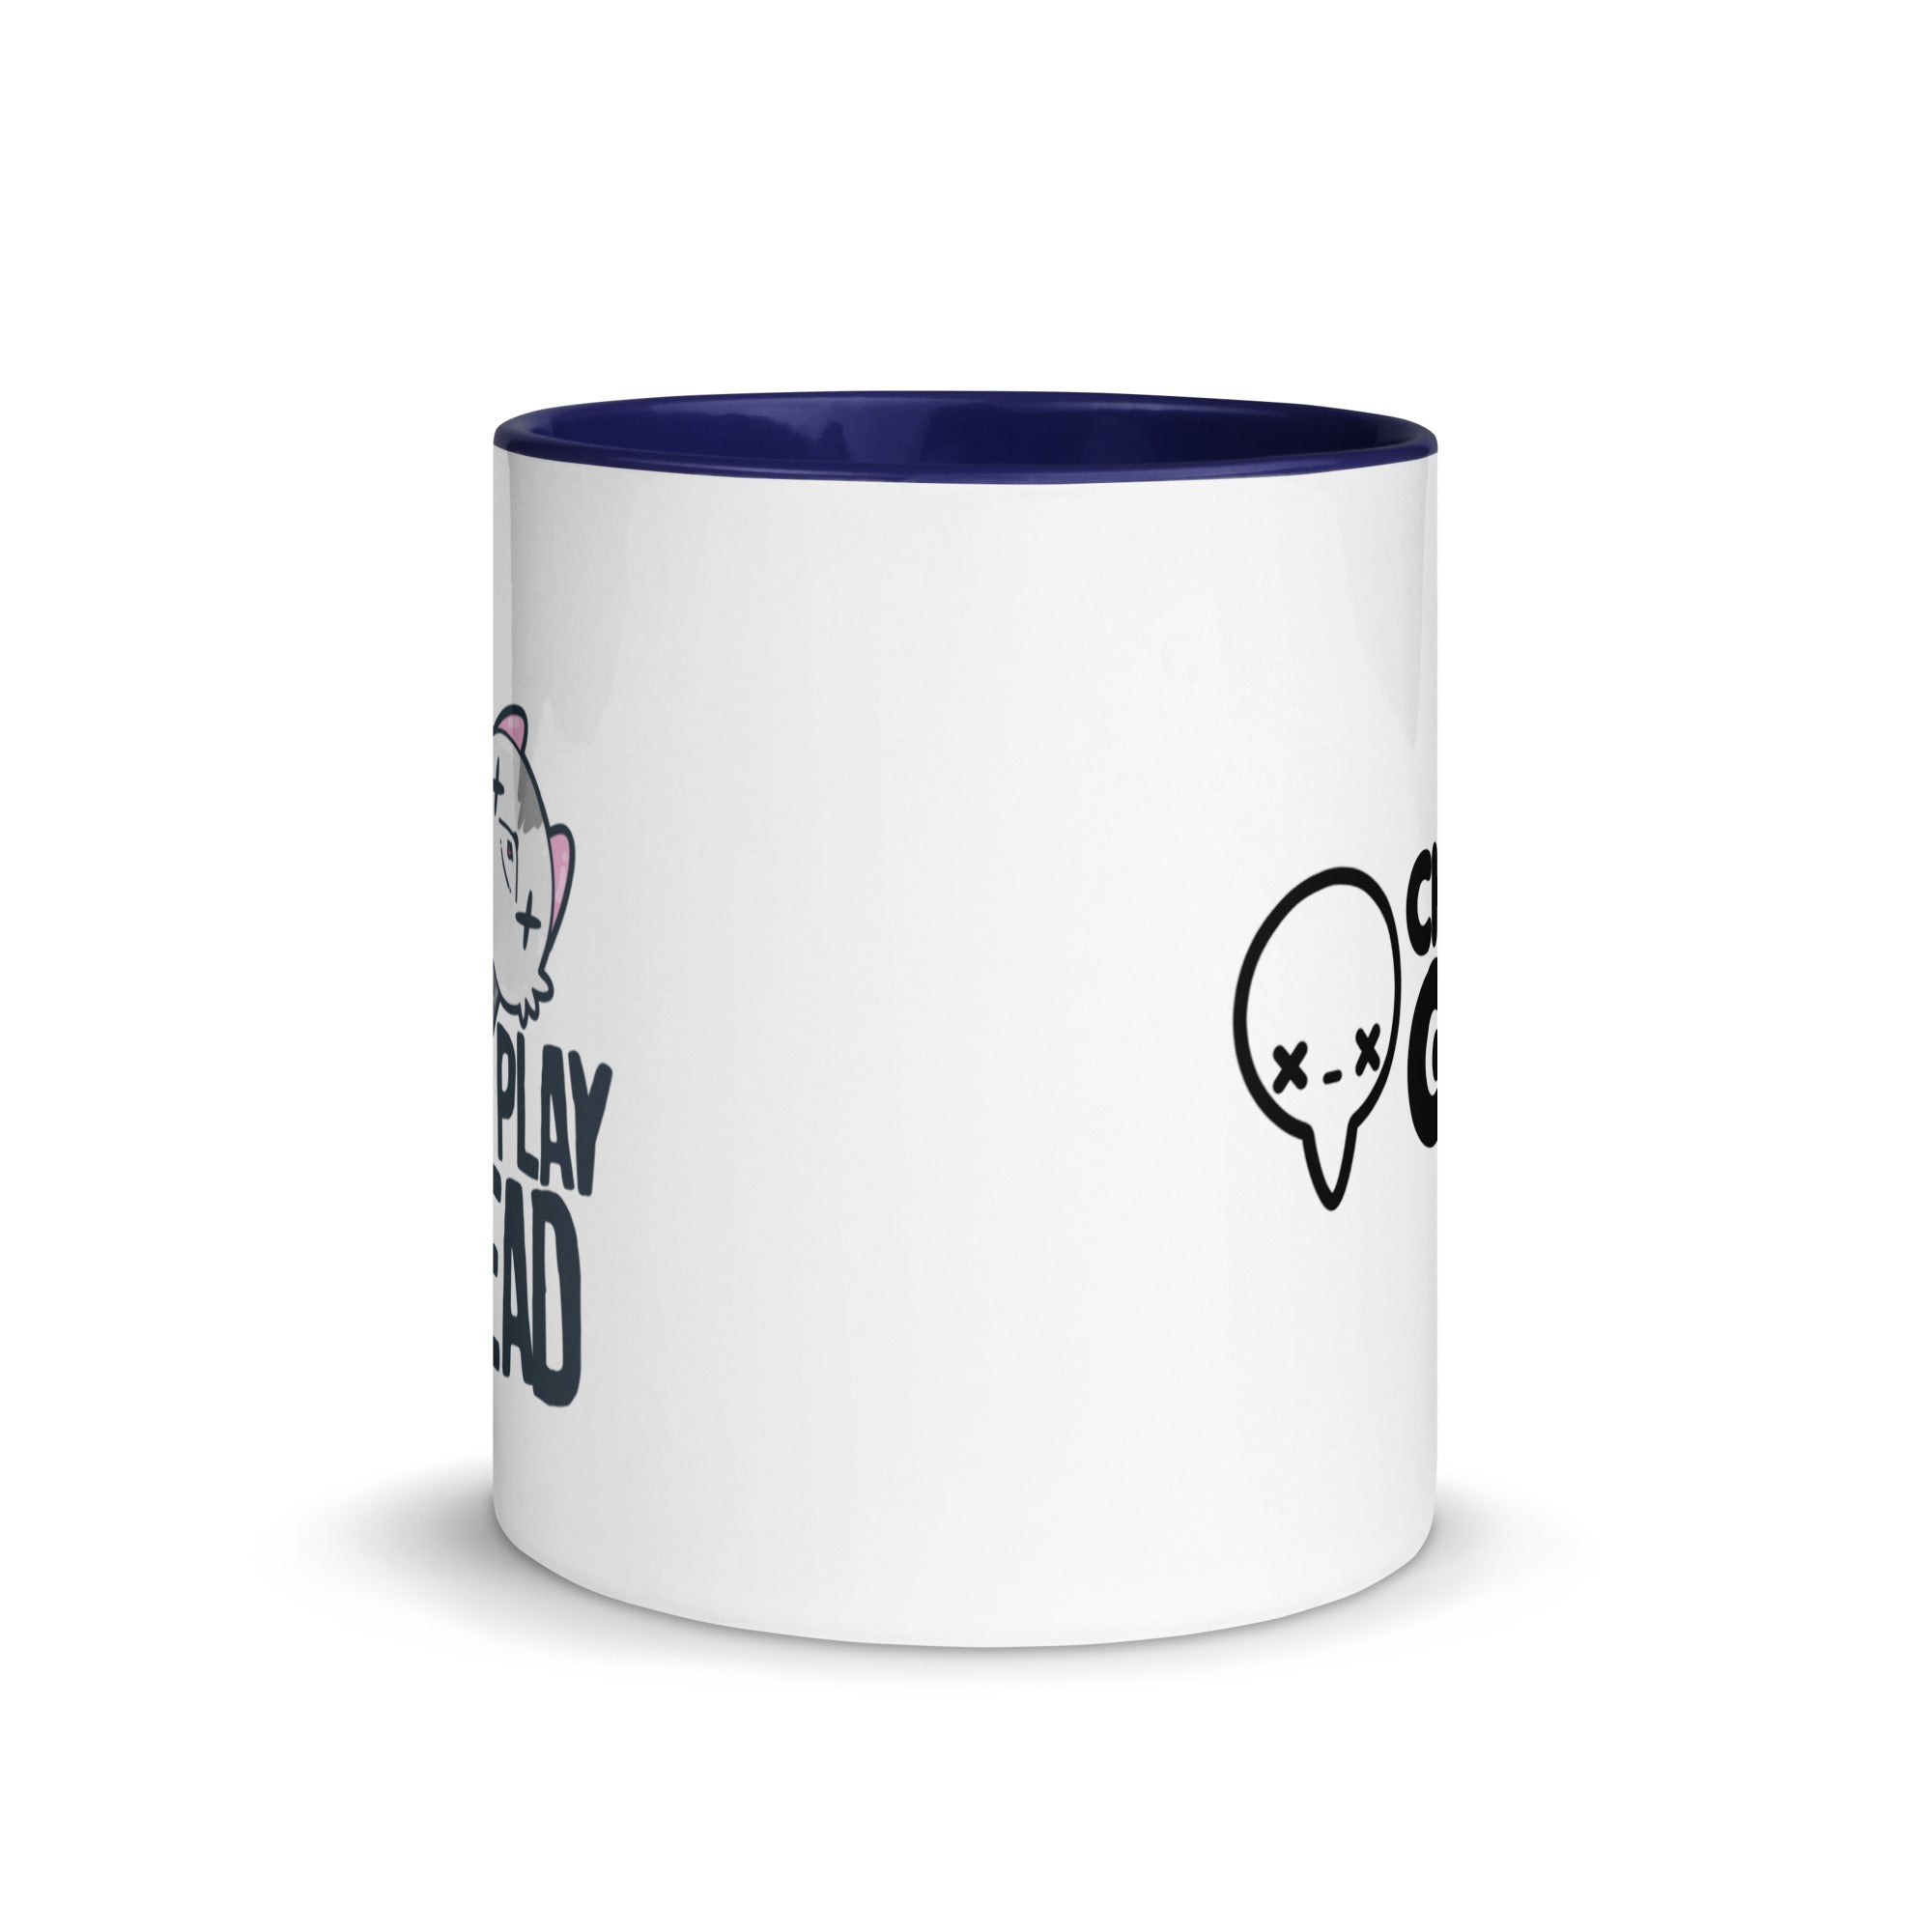 AVOID REAL LIFE PLAY DEAD - Mug with Color Inside - ChubbleGumLLC